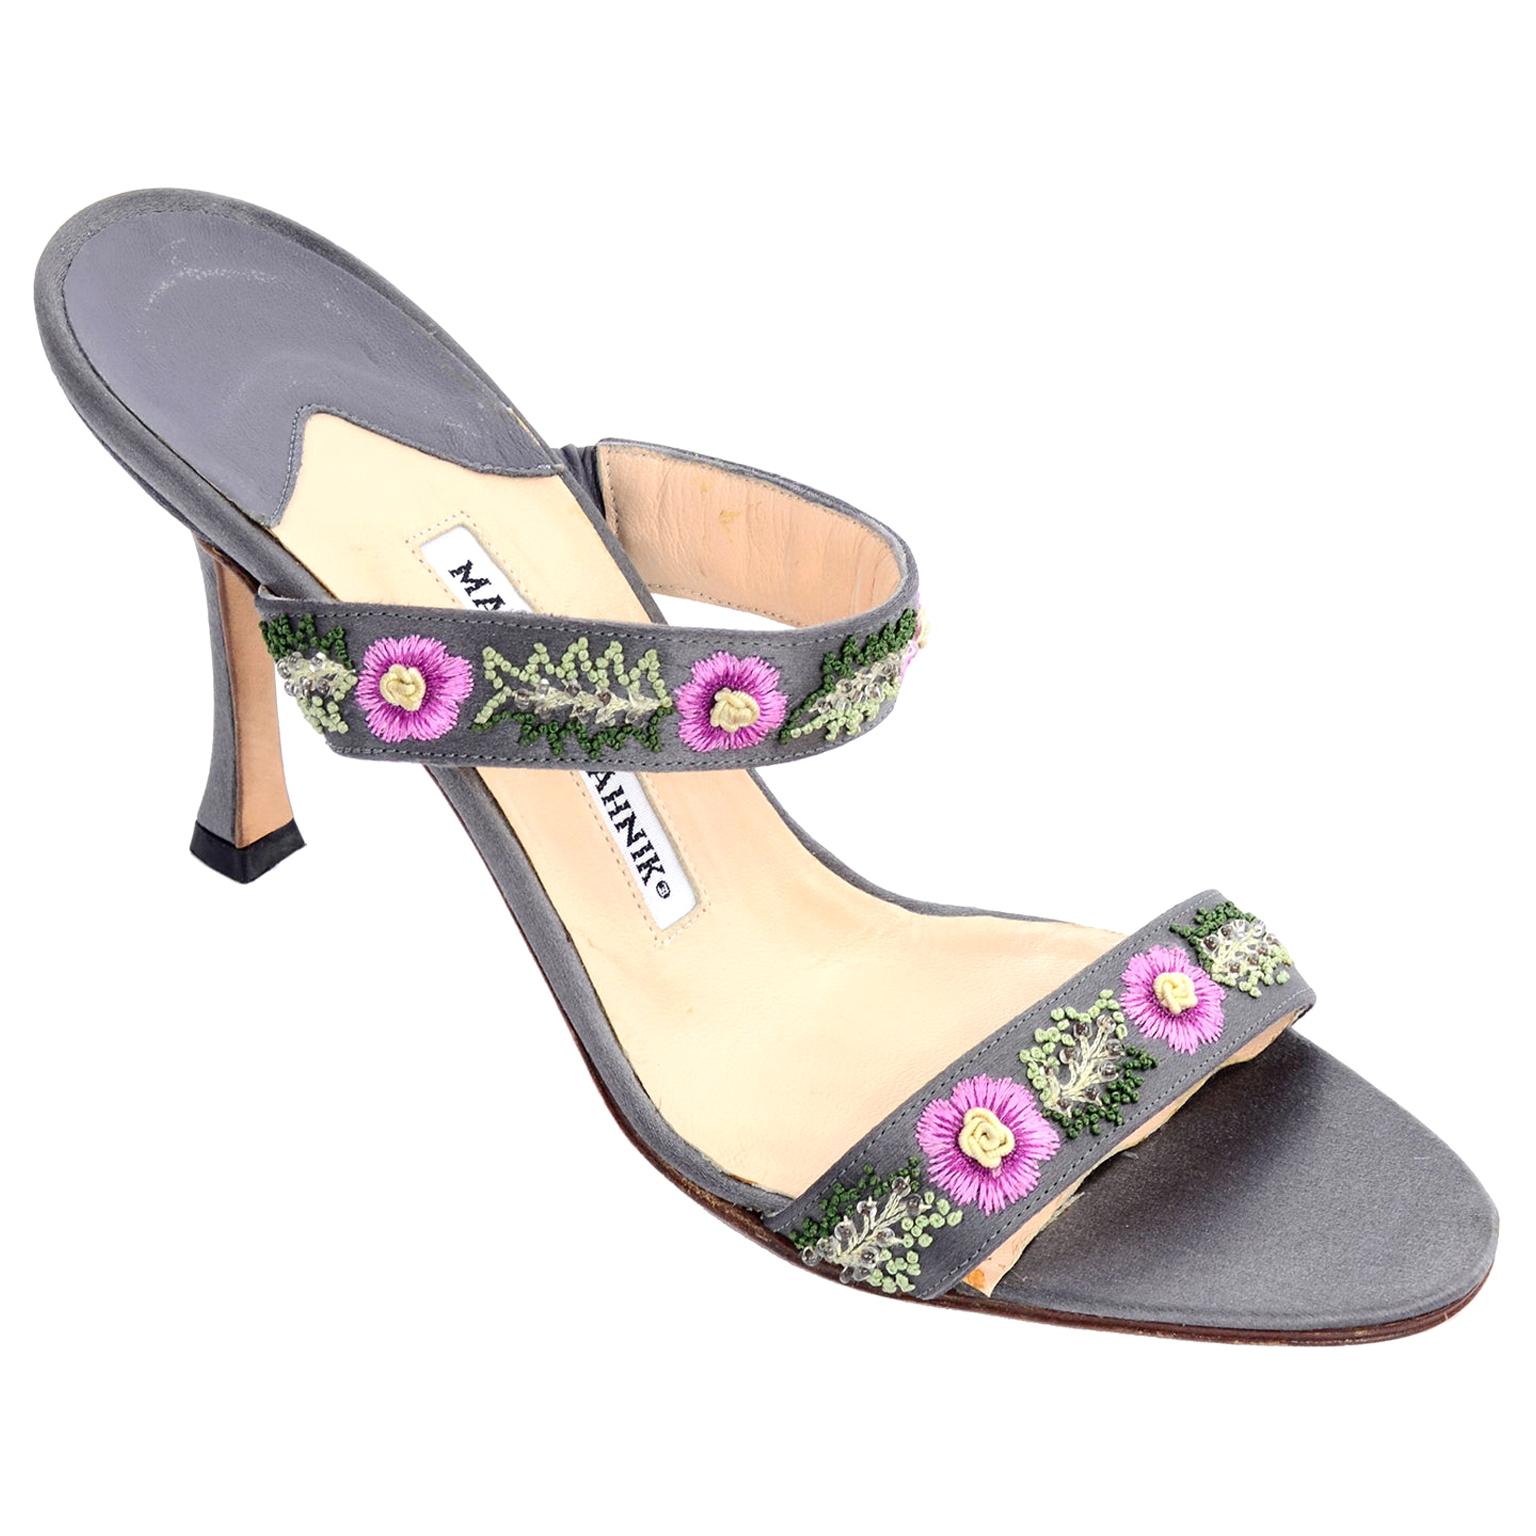 Manolo Blahnik Vintage Open Toe Beaded Slide Sandals W Pink Embroidered Flowers 